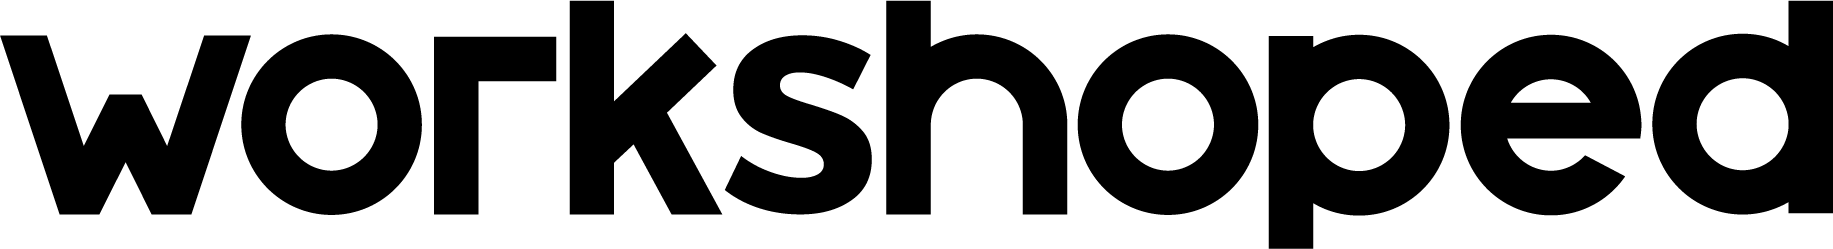 Workshoped – Logo Dark